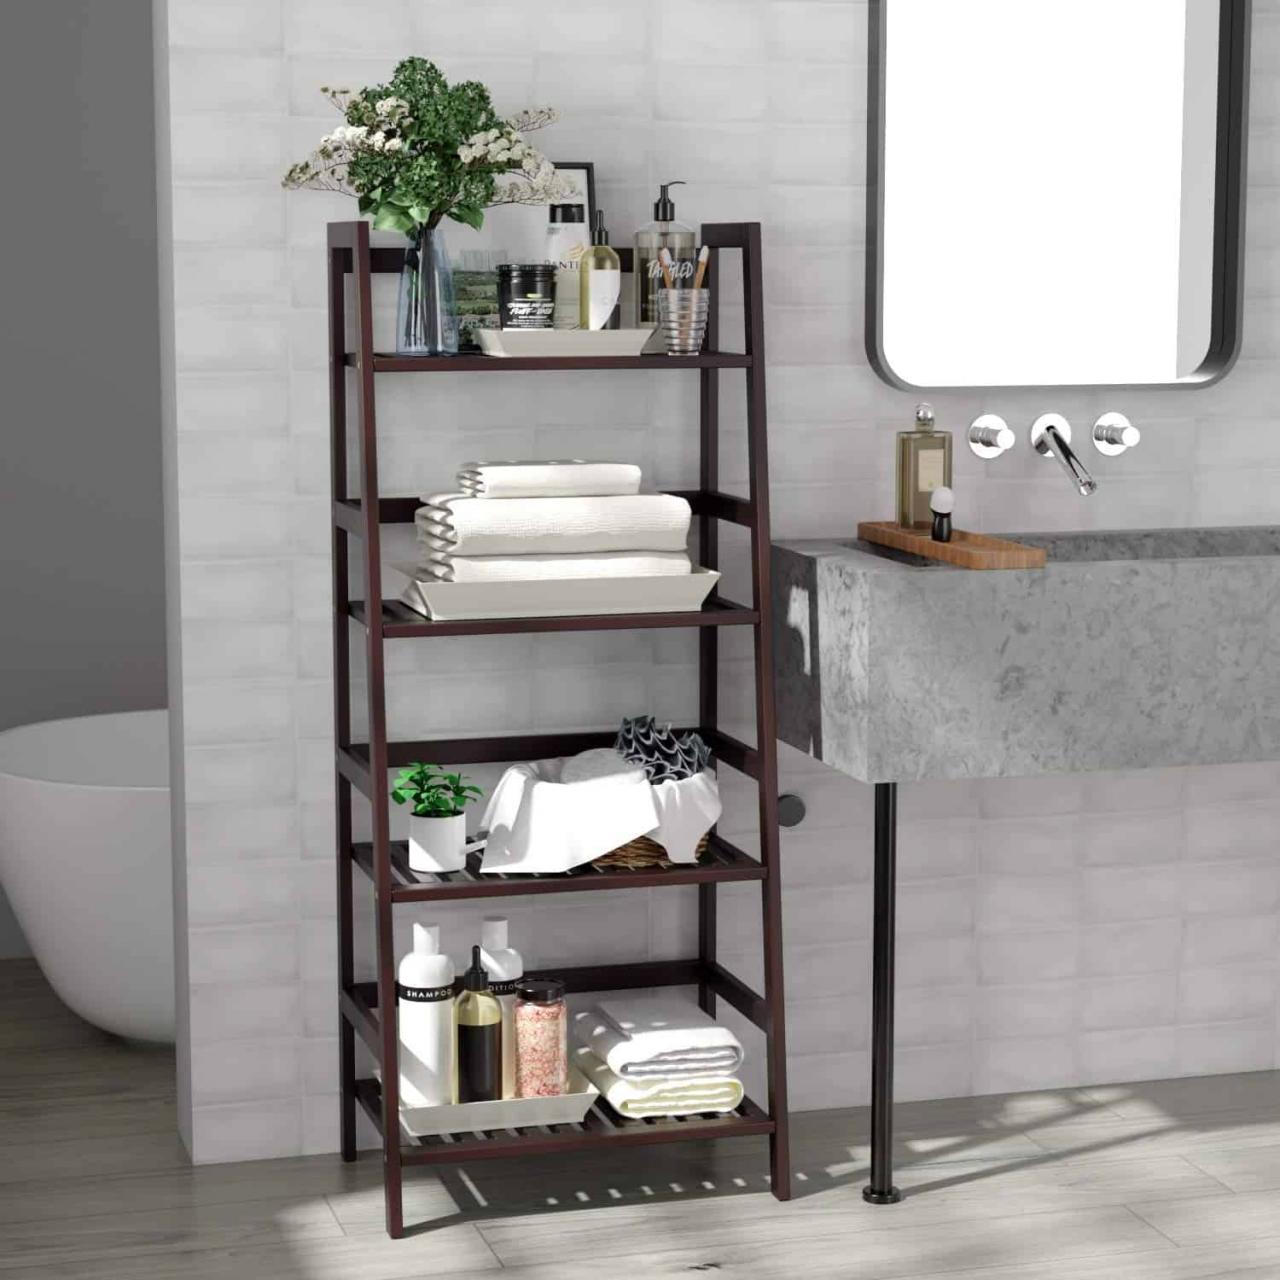 35 Best Bathroom Shelf Ideas for 2020 Unique Shelving Storage